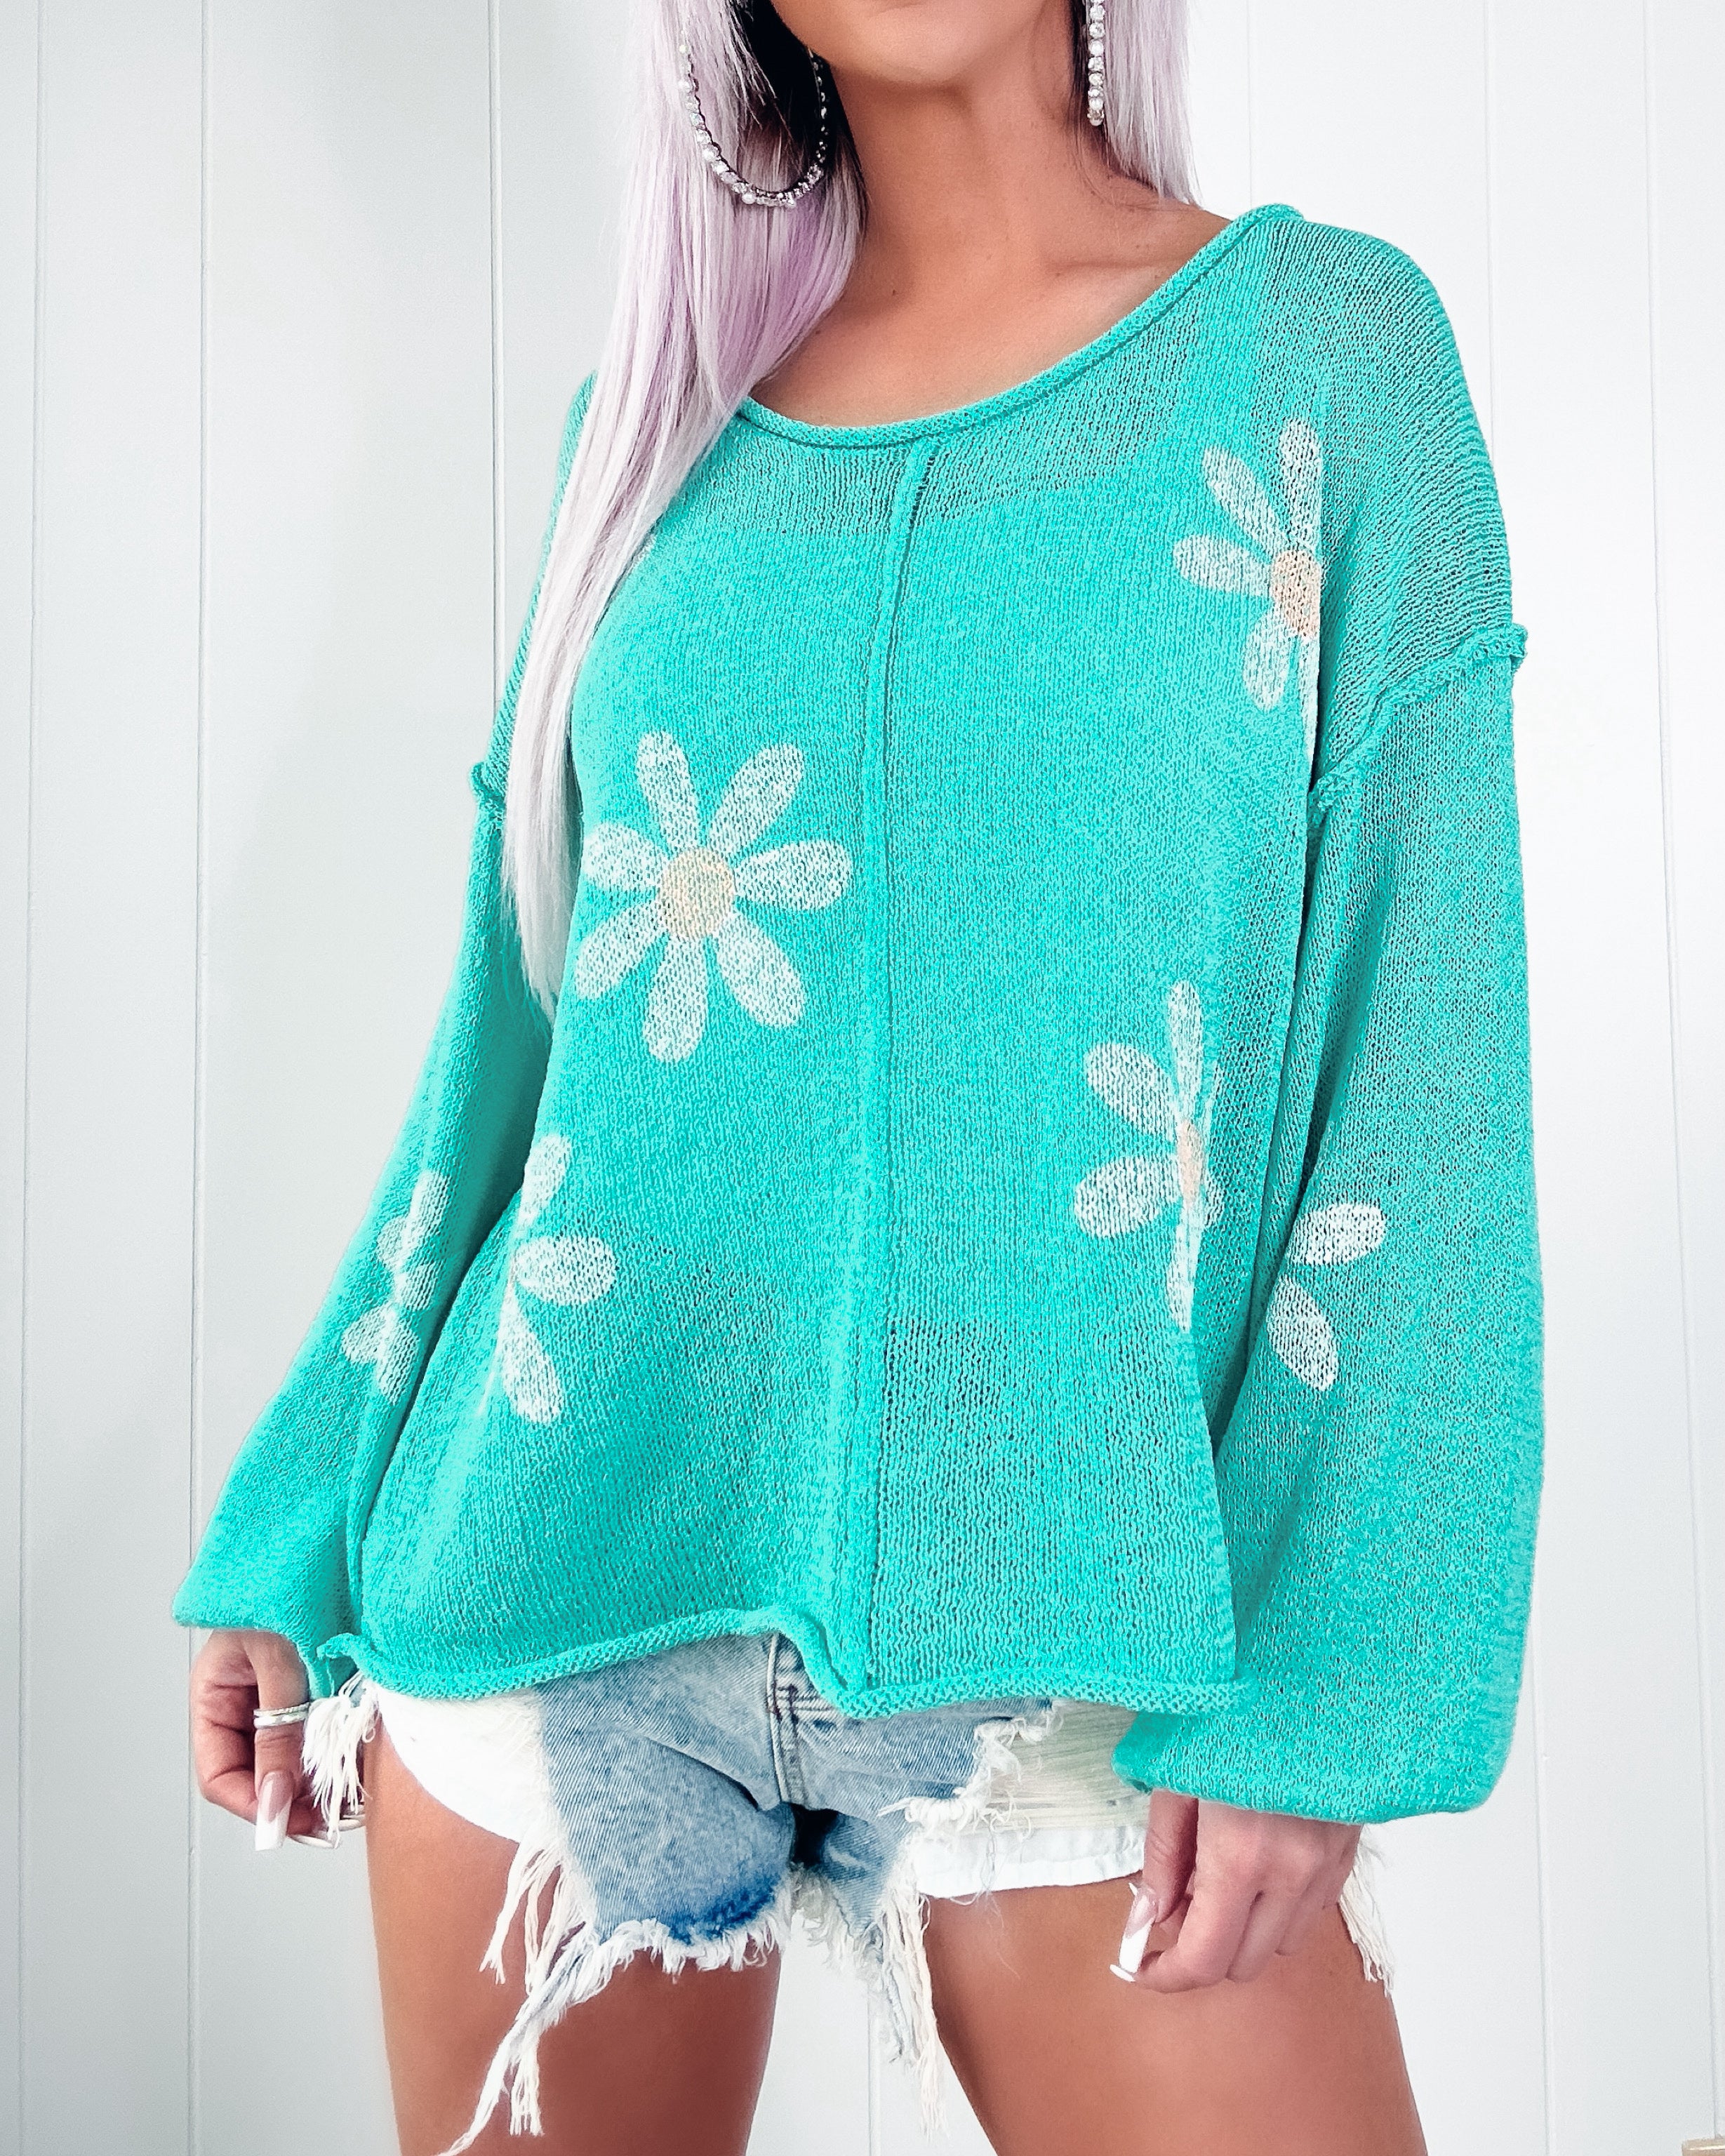 Daisy Delight Knit Sweater - Mint